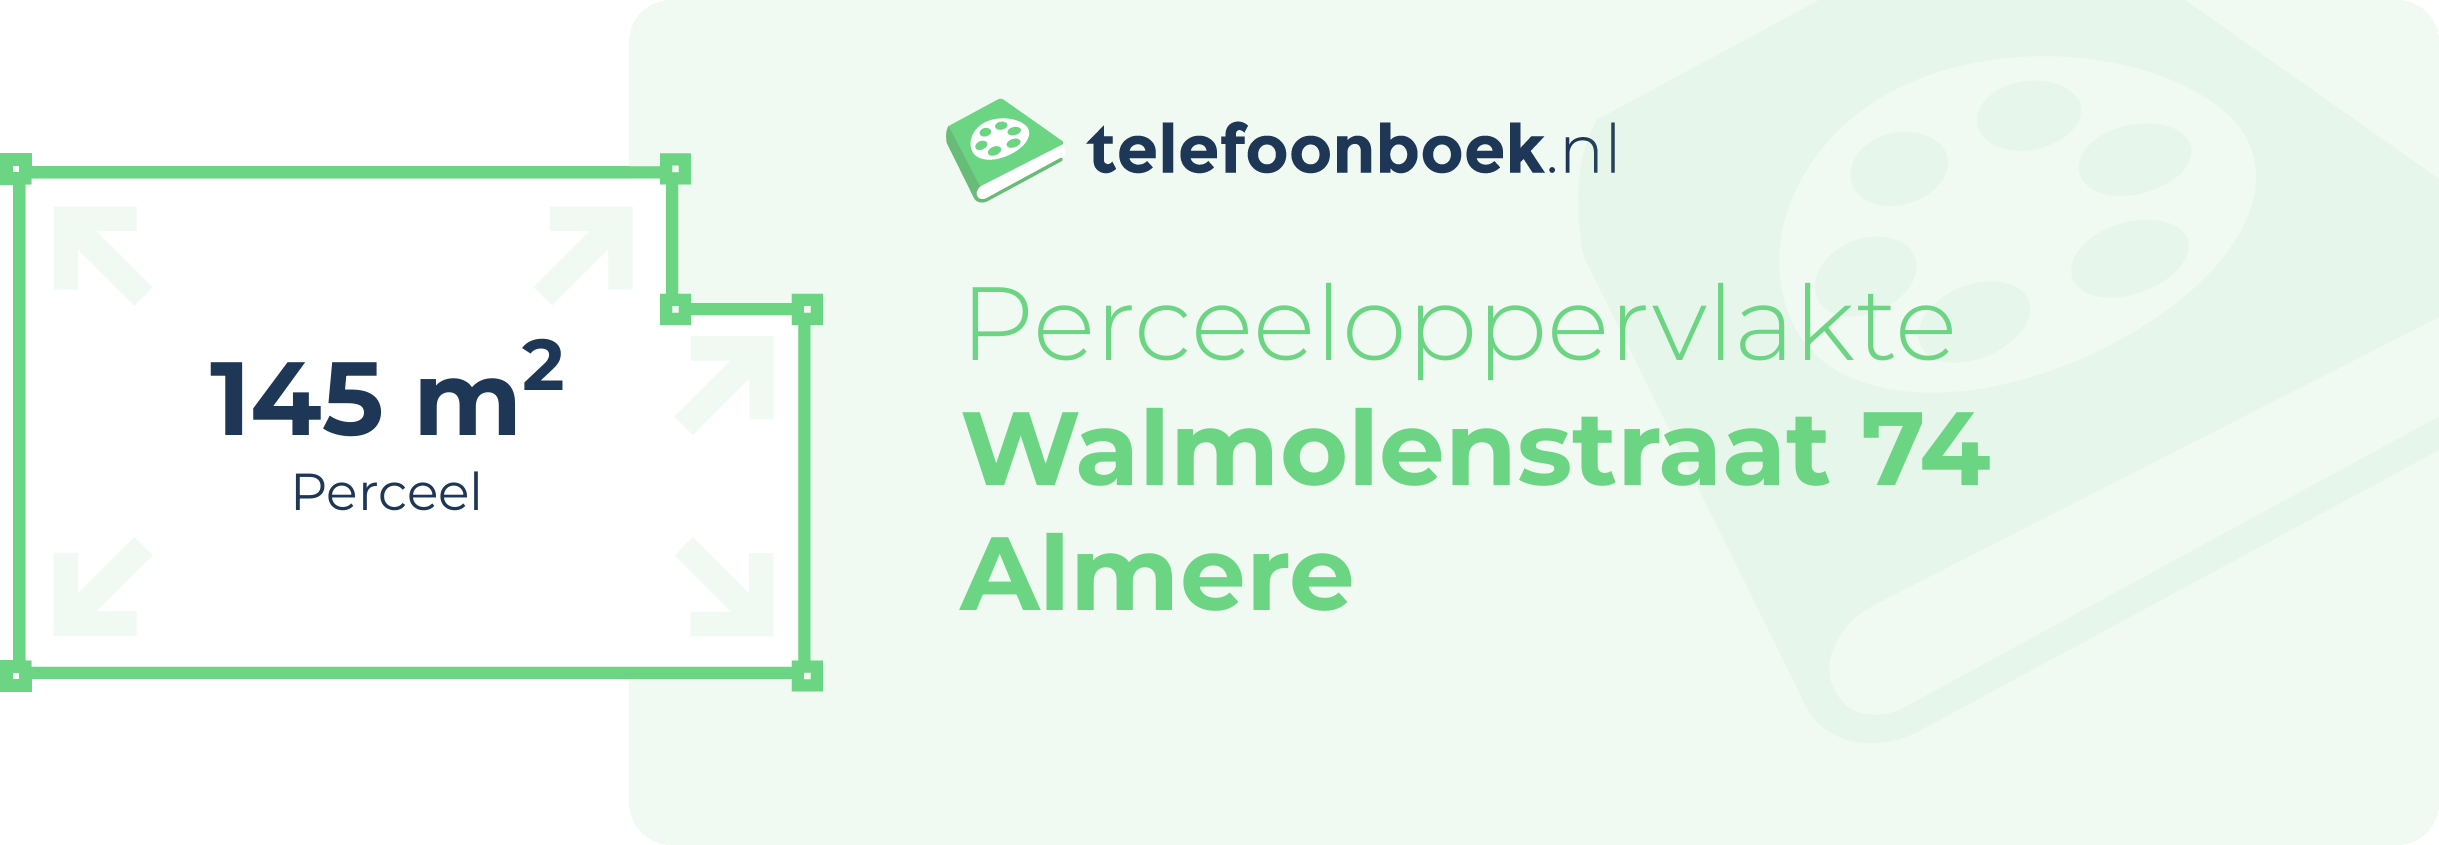 Perceeloppervlakte Walmolenstraat 74 Almere